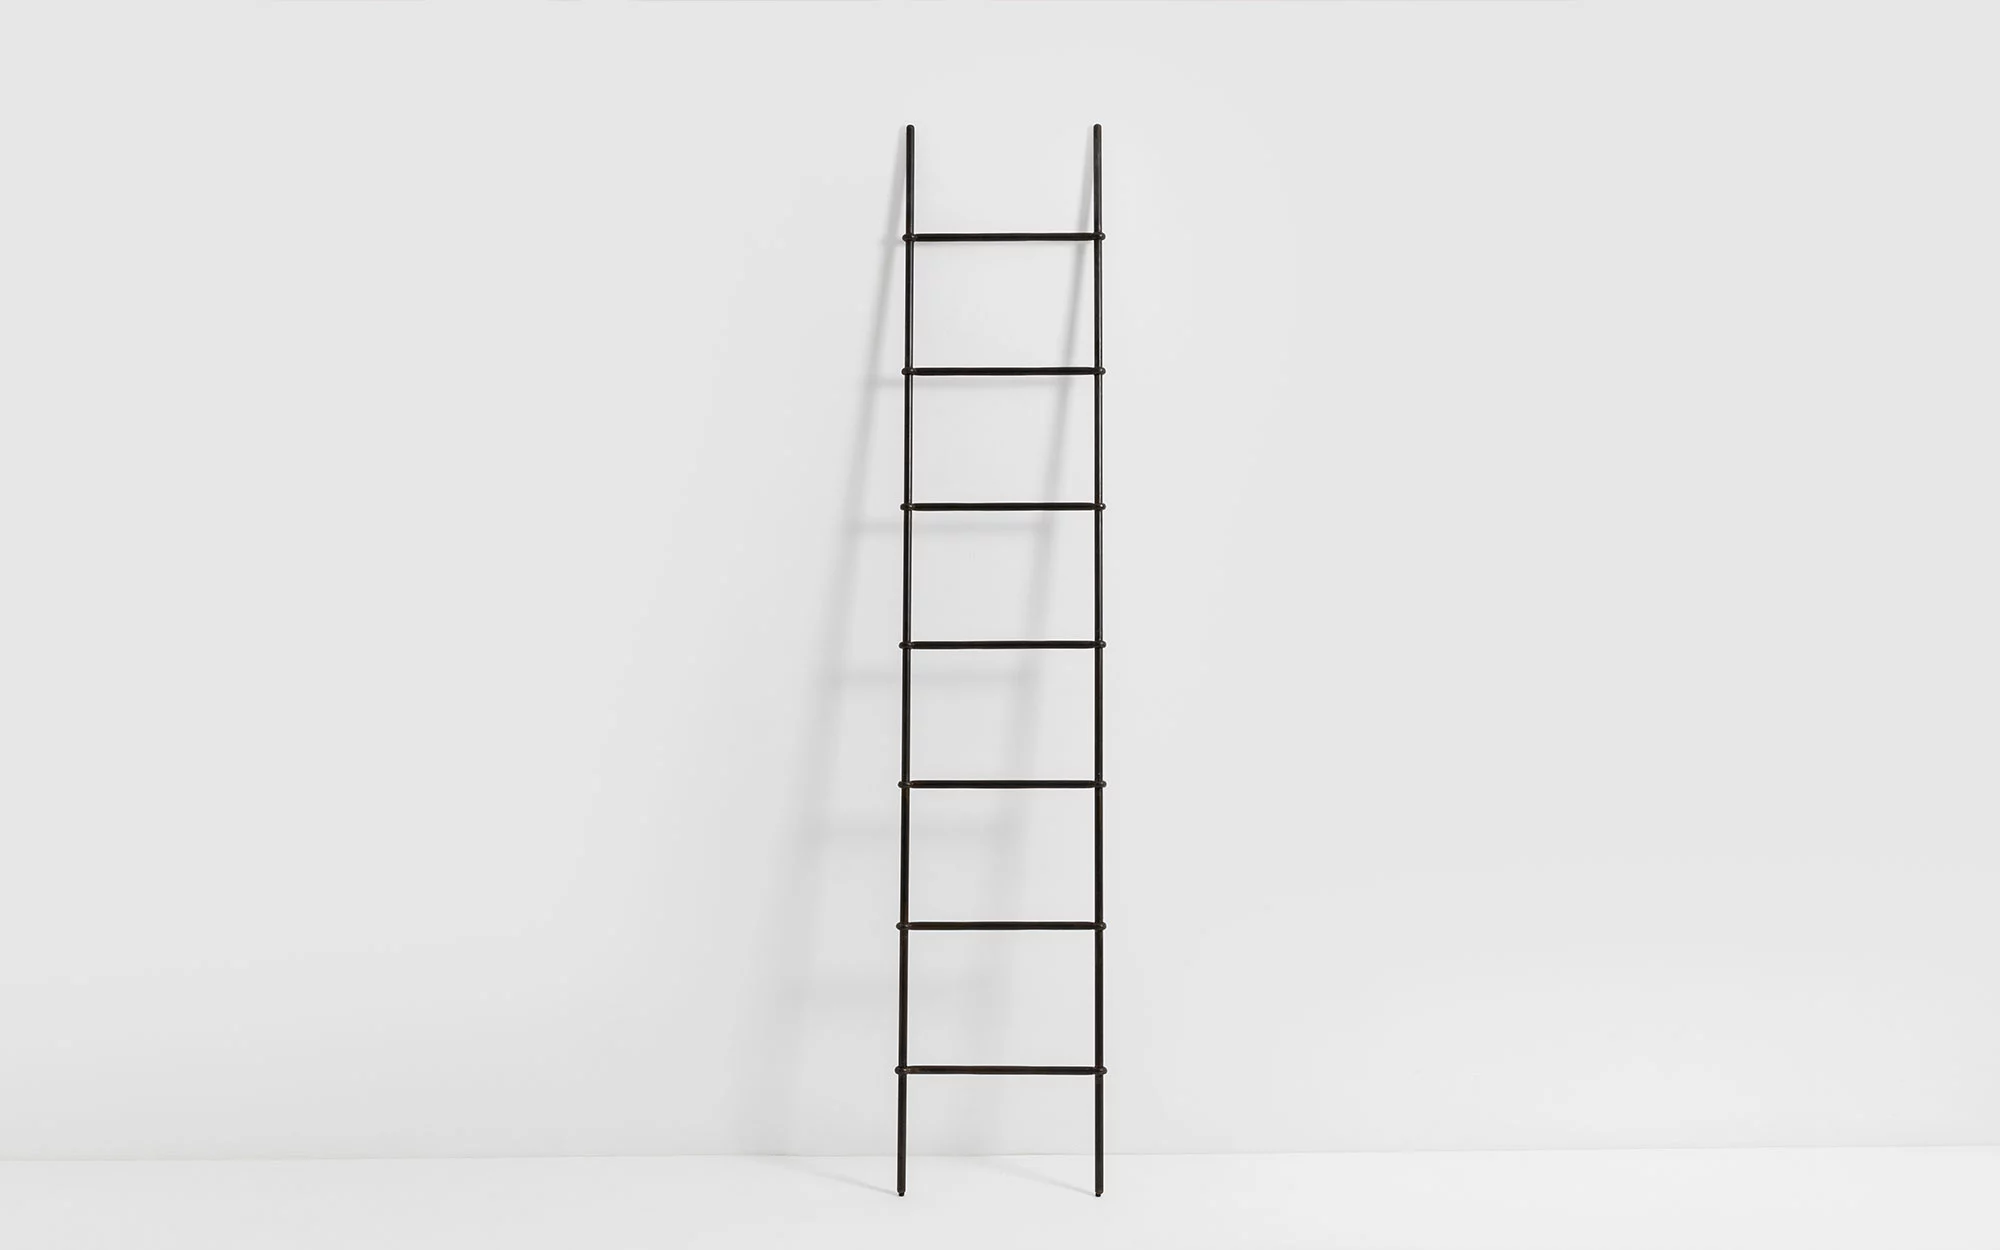 Ciel ladder - Ronan & Erwan Bouroullec - Coffee table - Galerie kreo